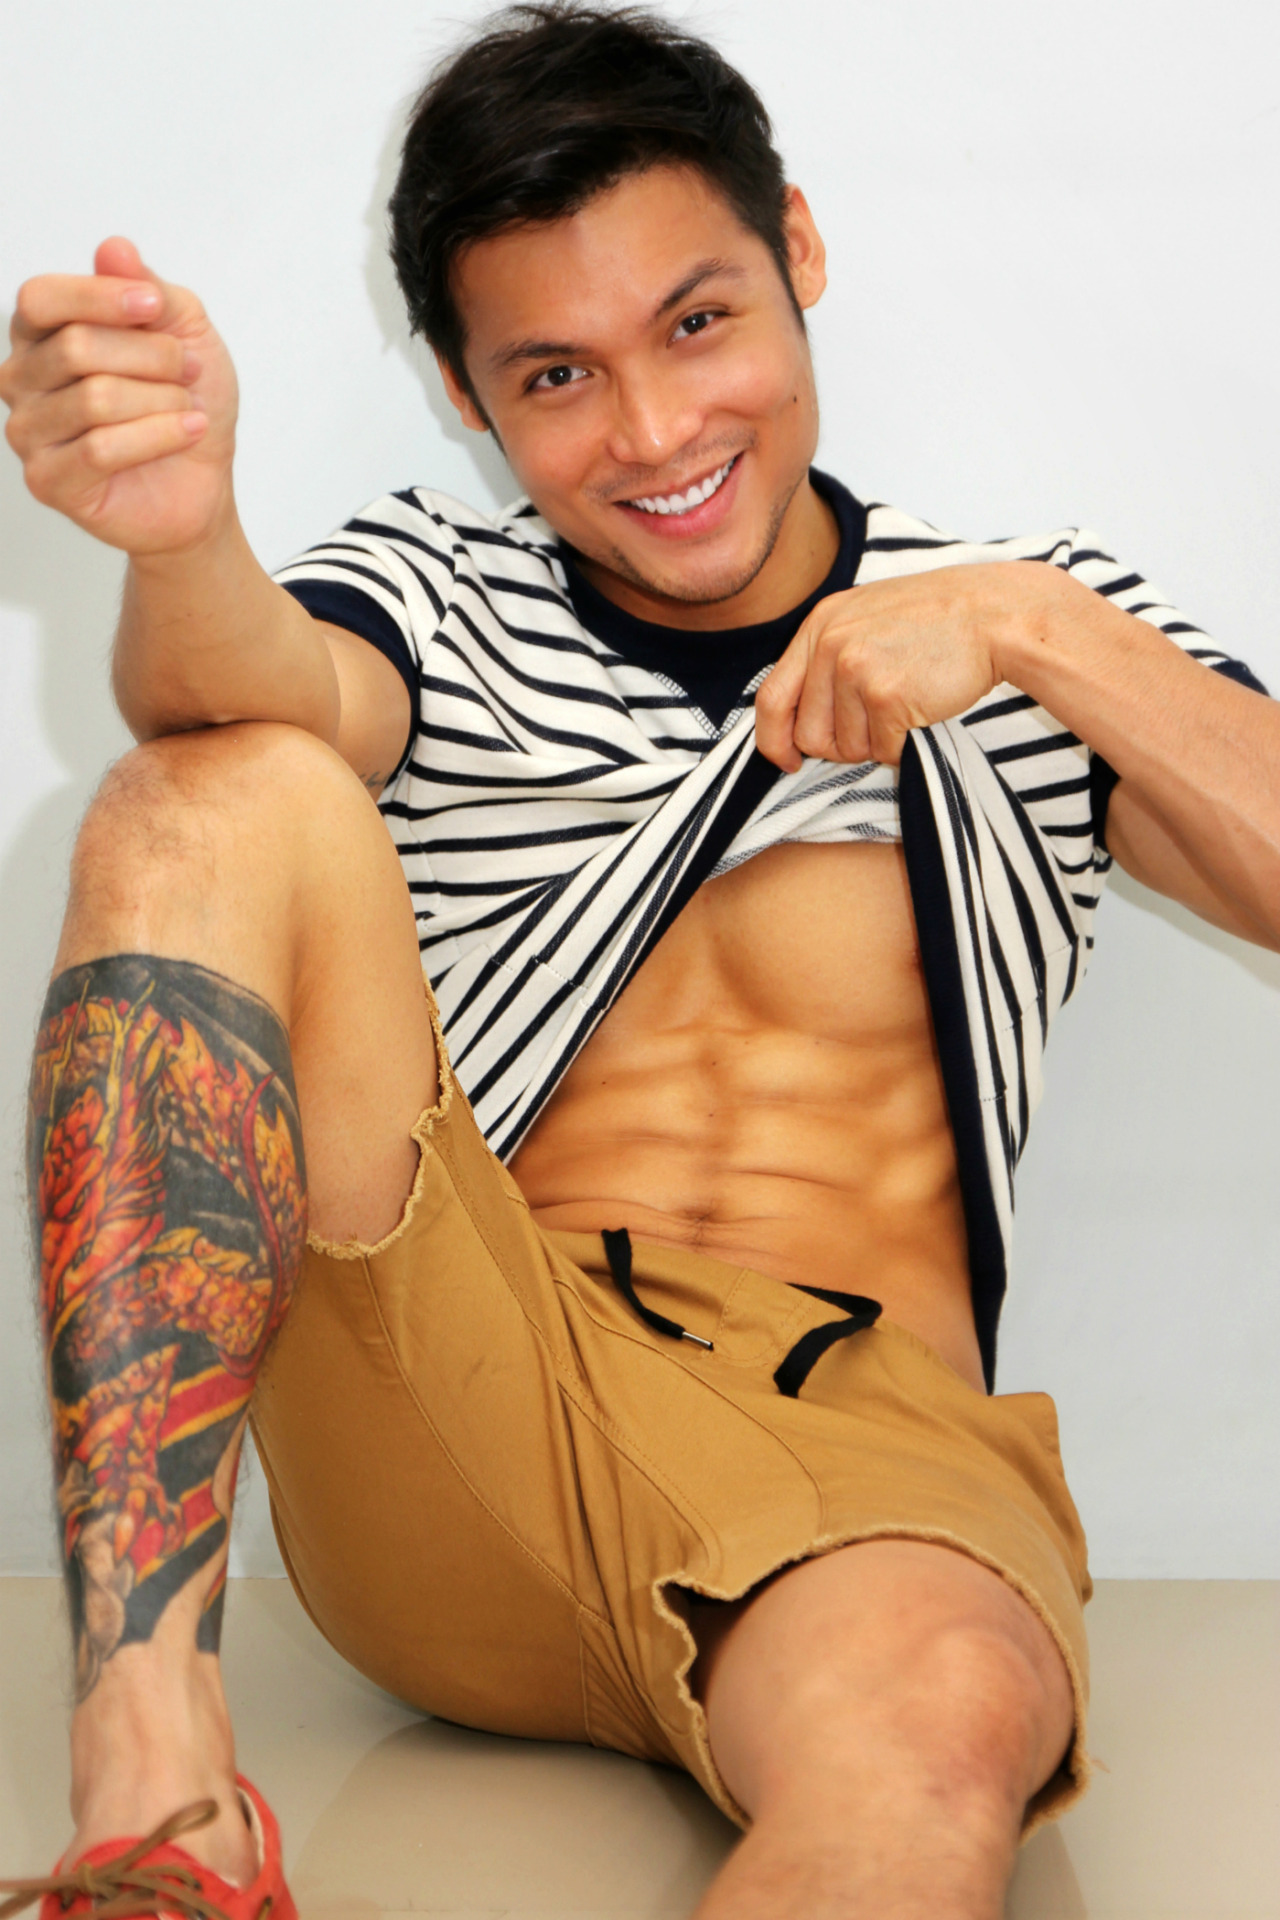 rome-grant-jay-gonzaga-actor-model-philippines-01.jpg